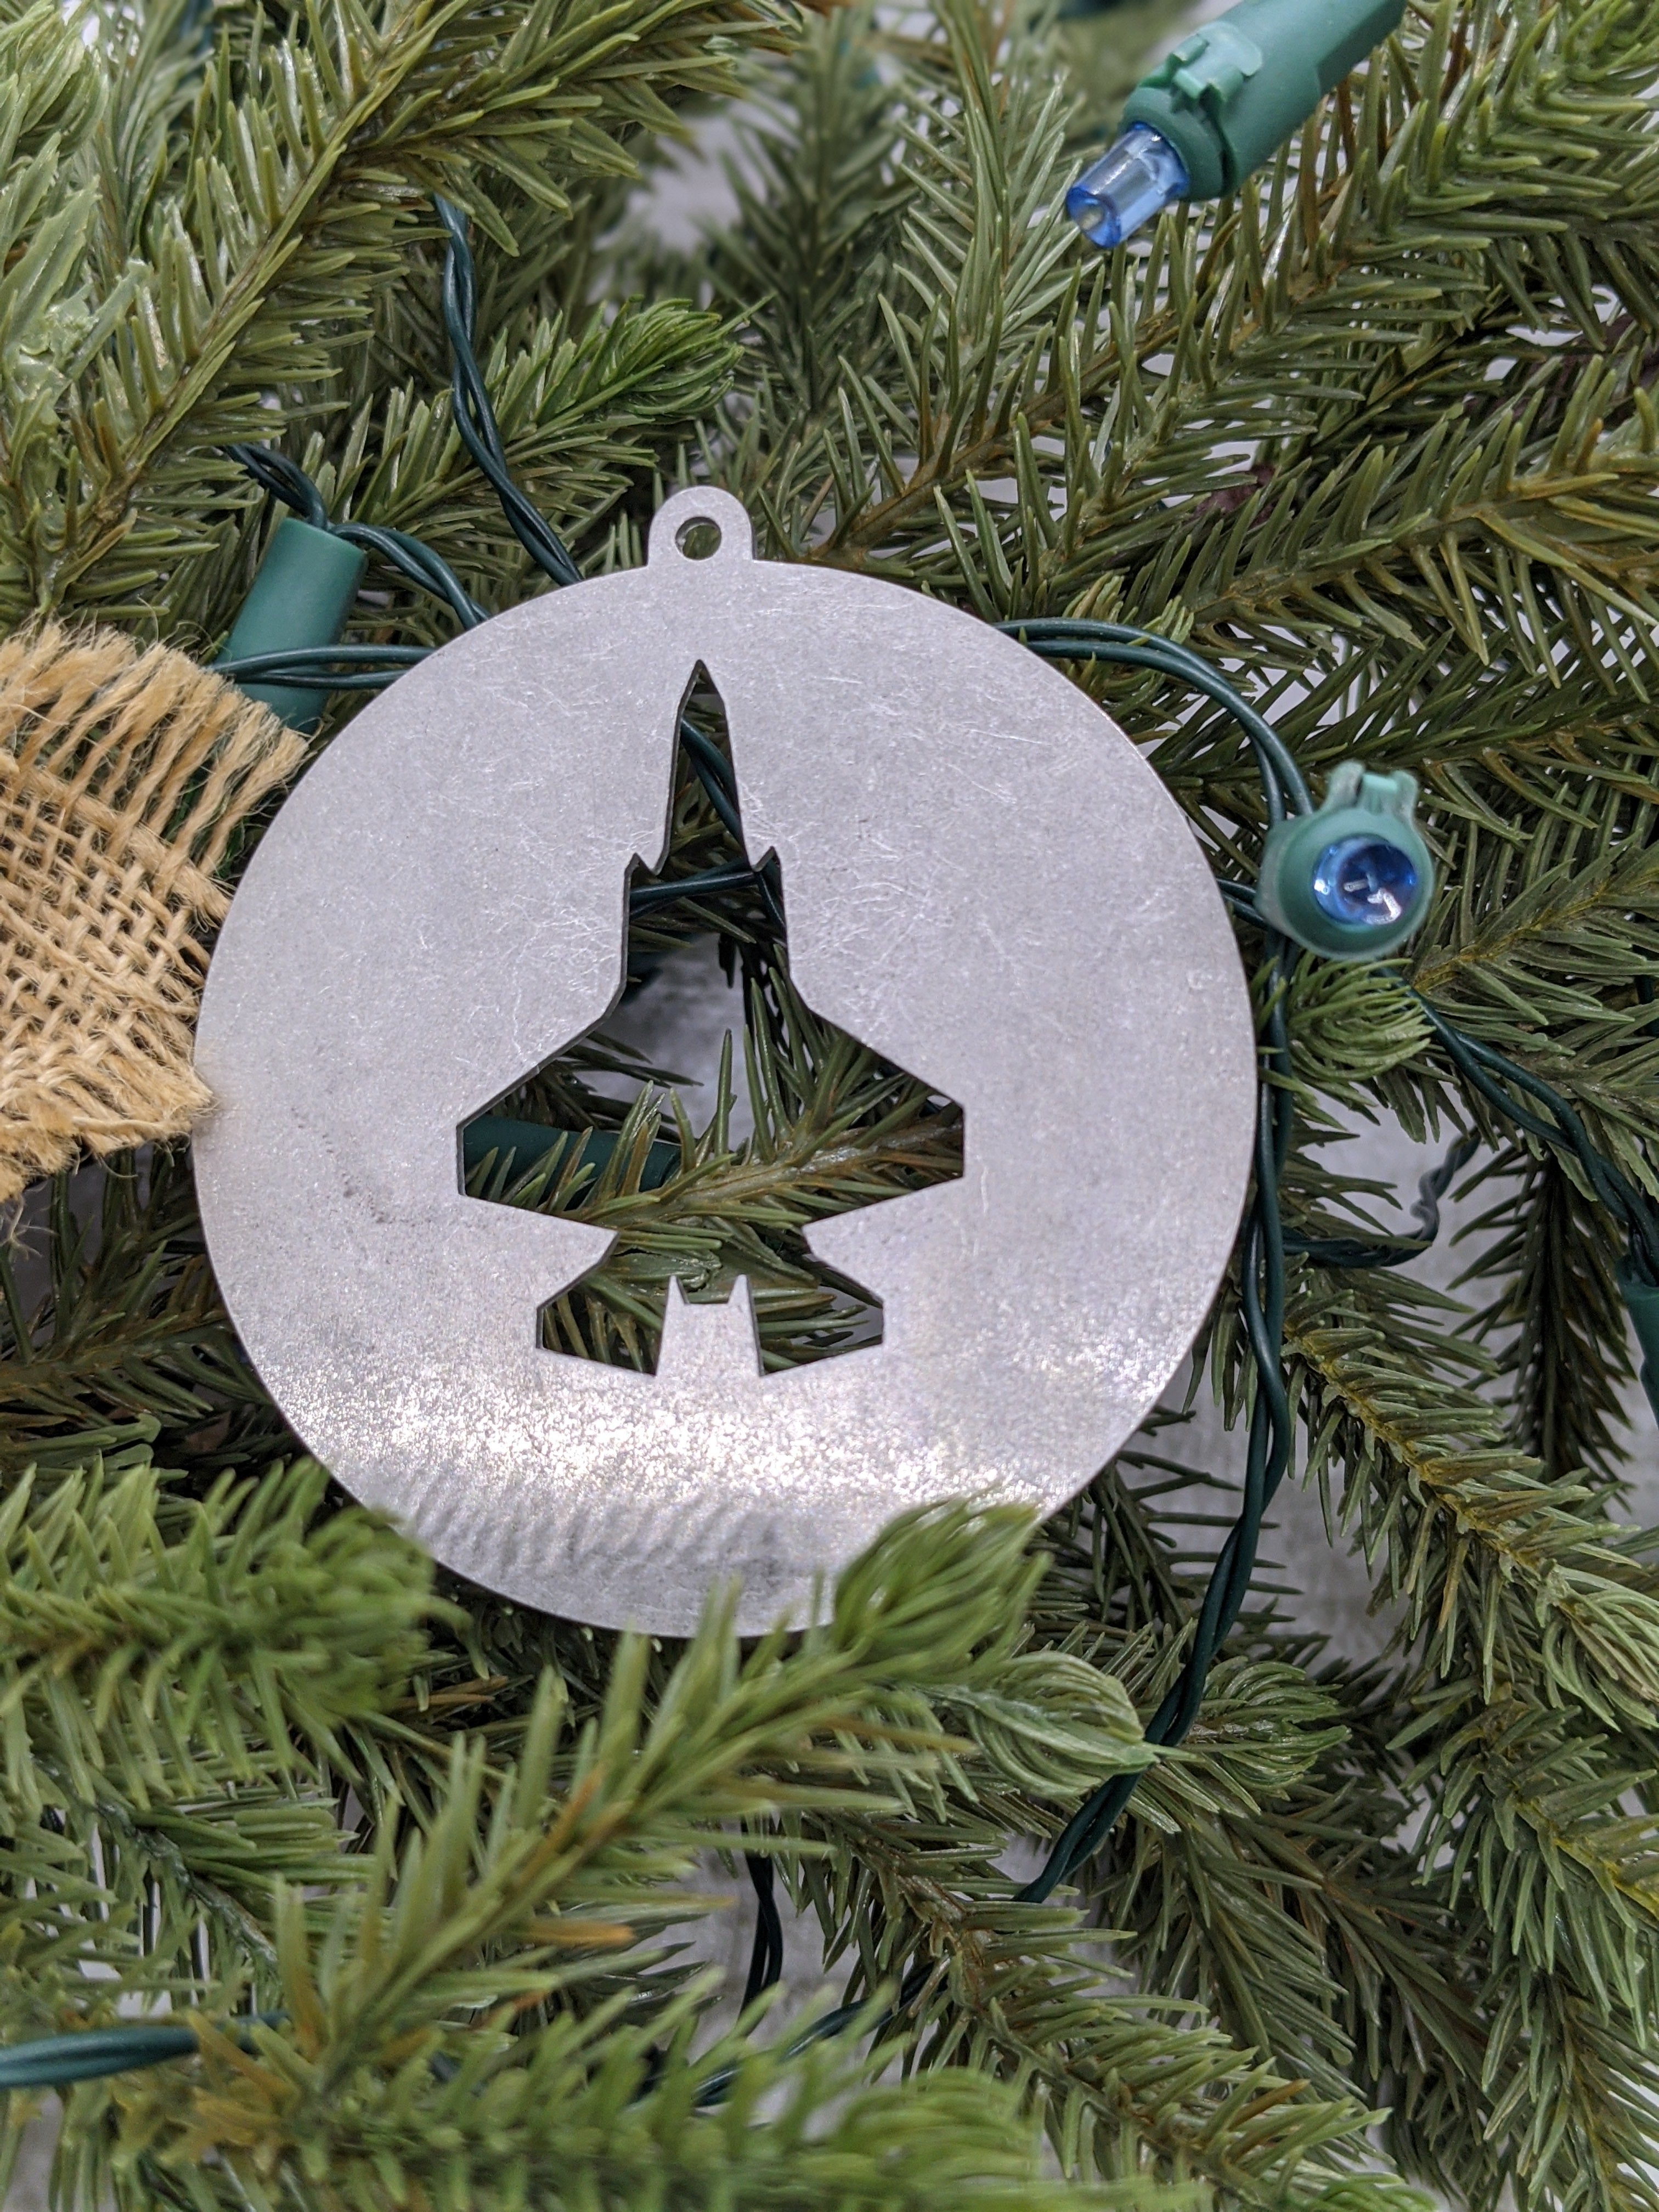 F-35 Christmas Ornament